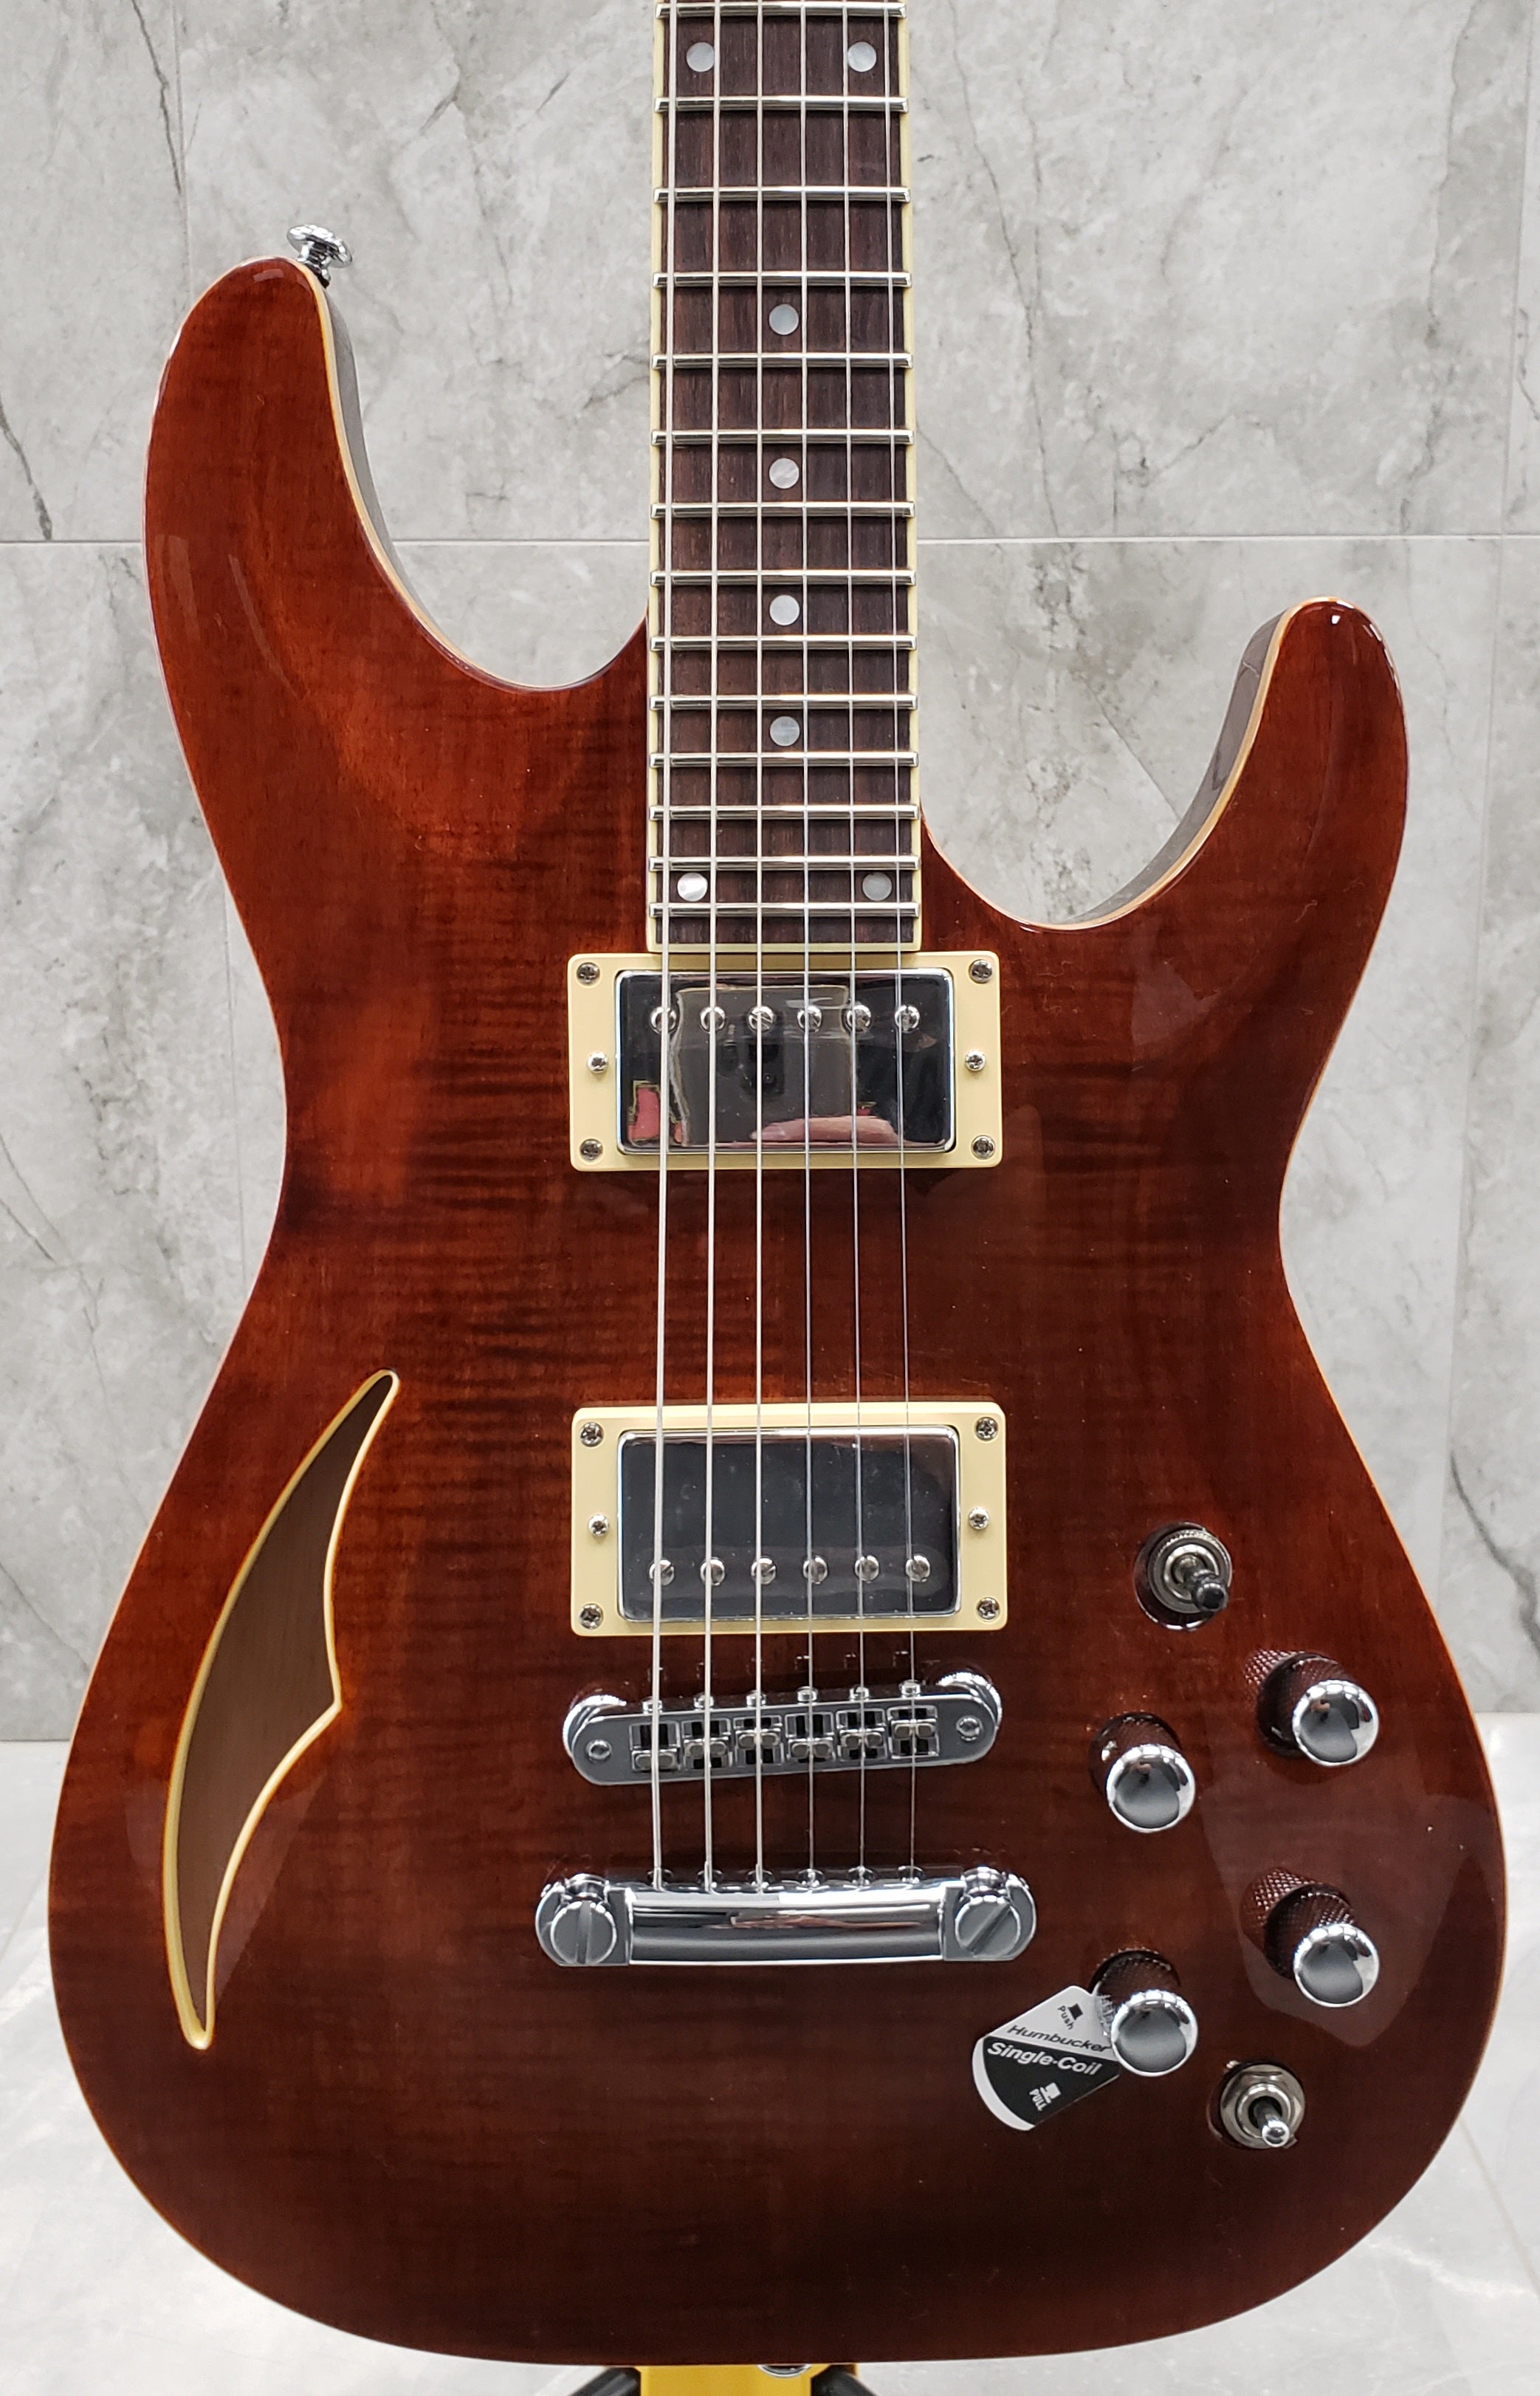 Schecter C-1 E/A Semi-hollowbody Electric Guitar Mahogany Body Flame Maple Top - Rosewood Fingerboard - Cat's Eye 640-shc